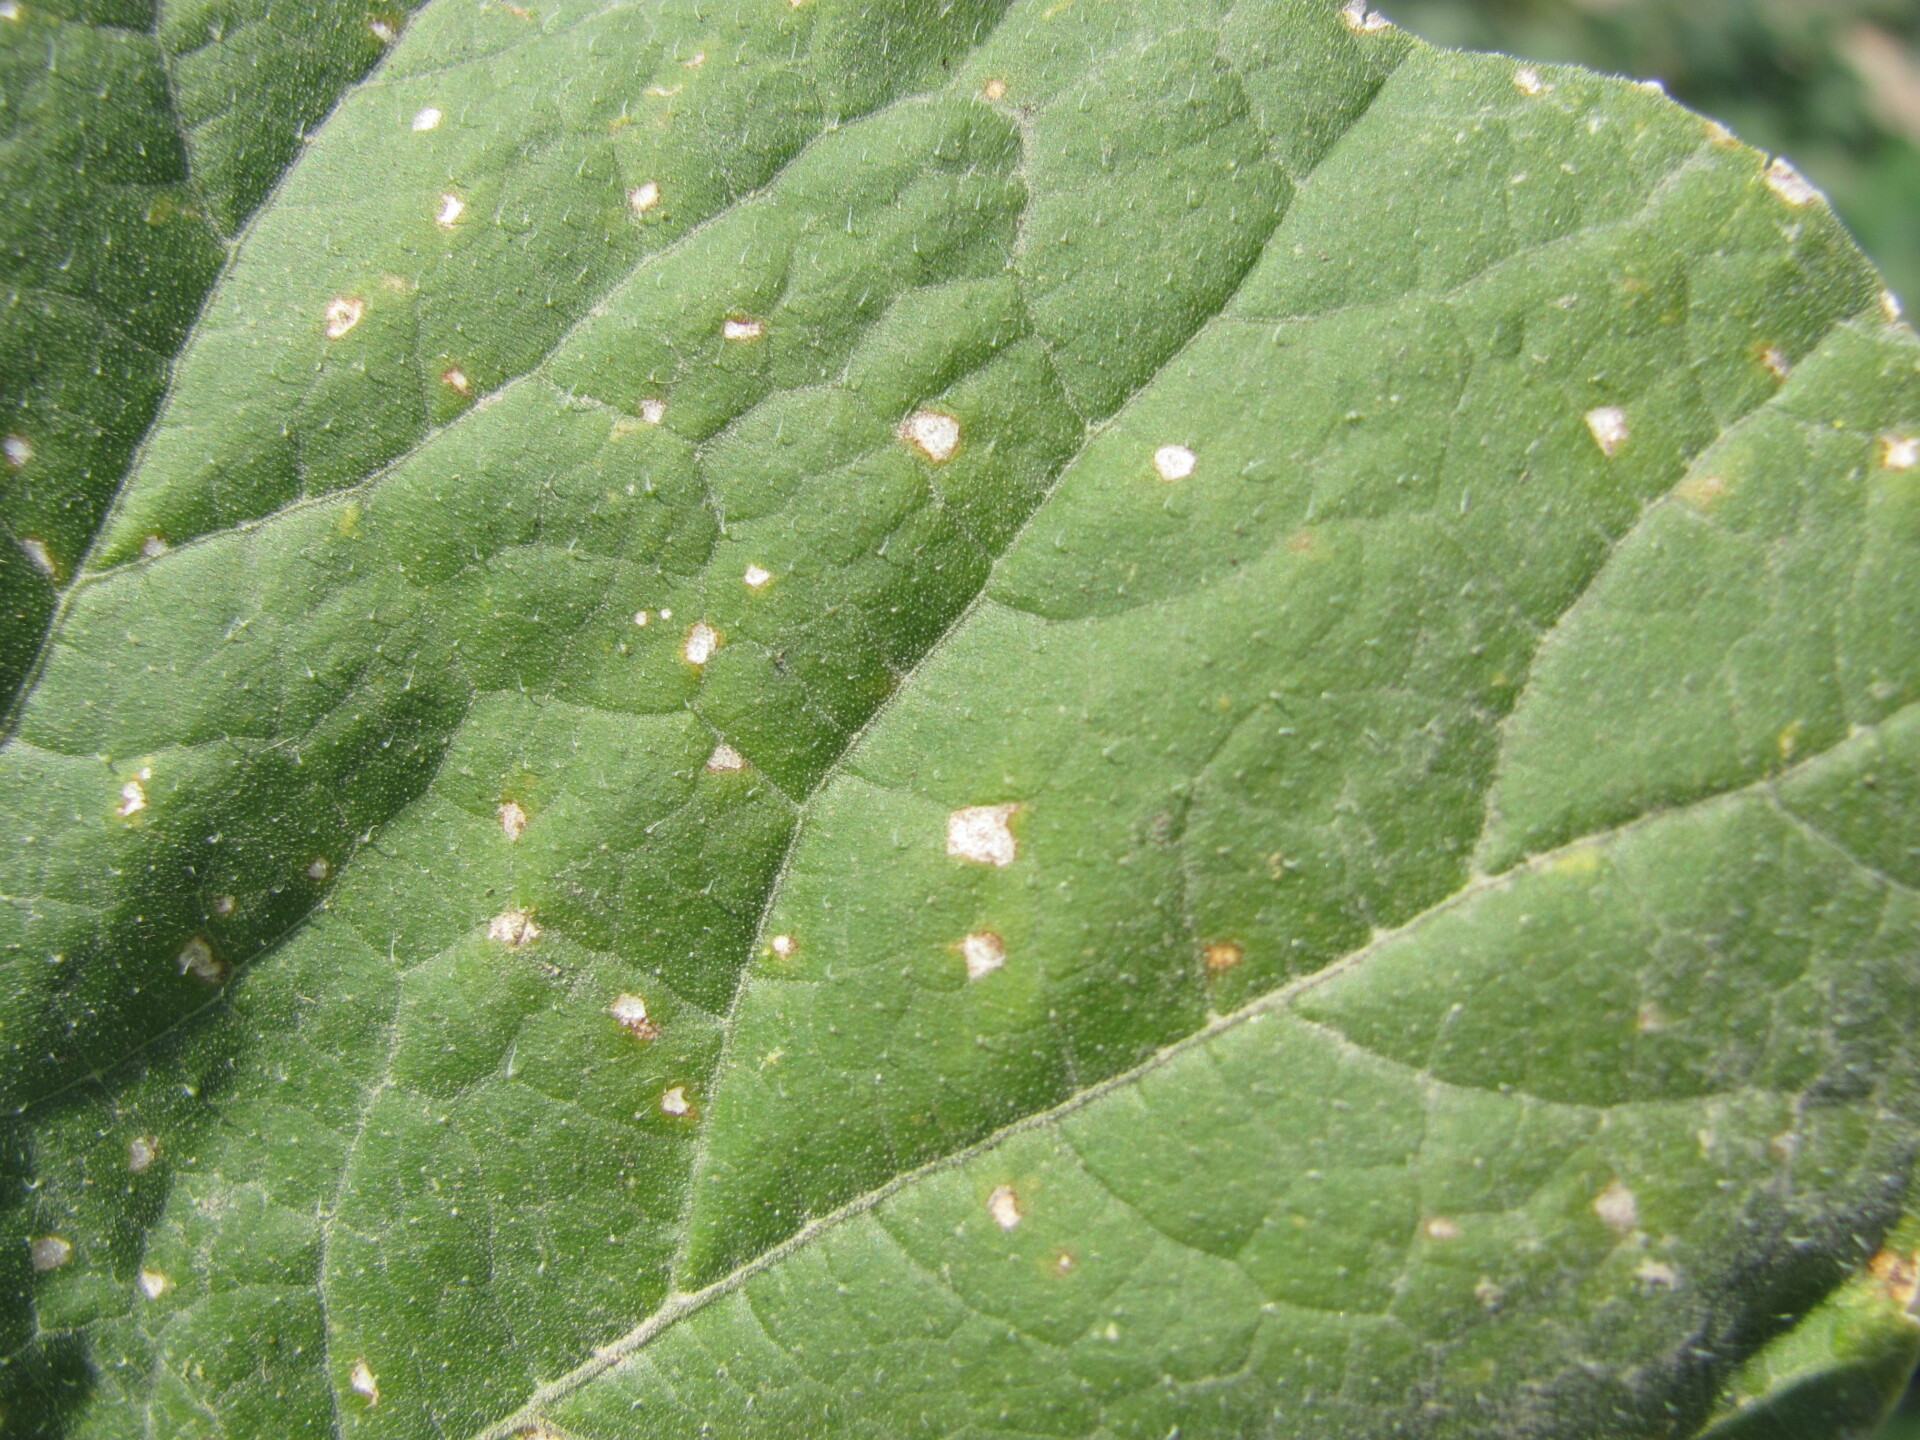  Cercospora leaf spot of pumpkin.